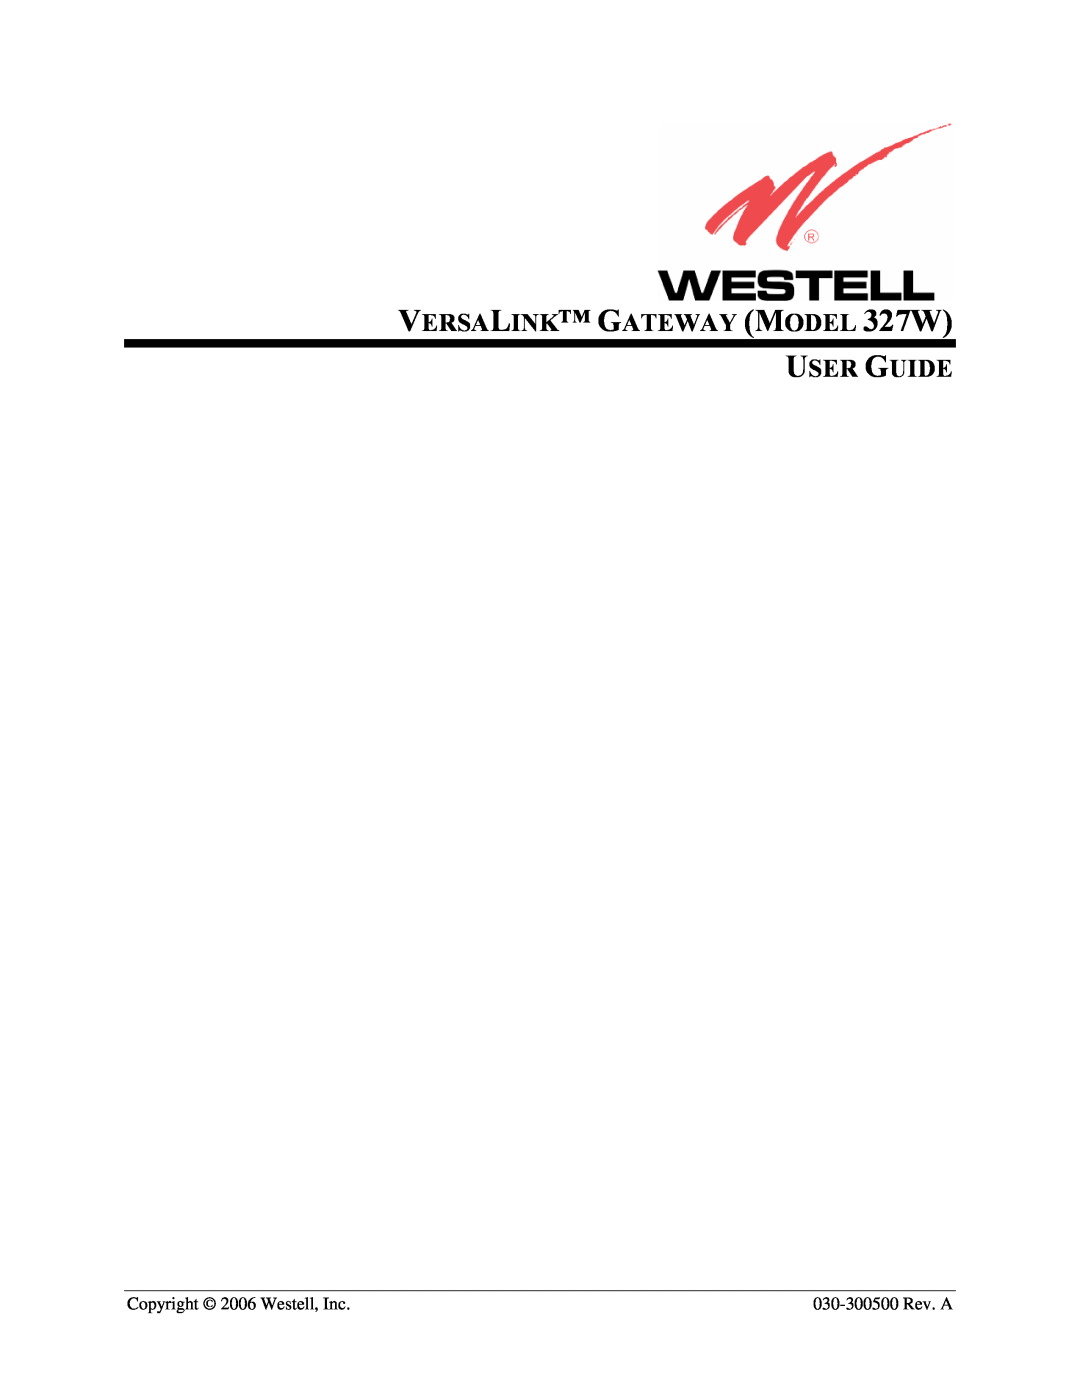 Westell Technologies manual VERSALINK GATEWAY MODEL 327W USER GUIDE, Copyright 2006 Westell, Inc, 030-300500 Rev. A 